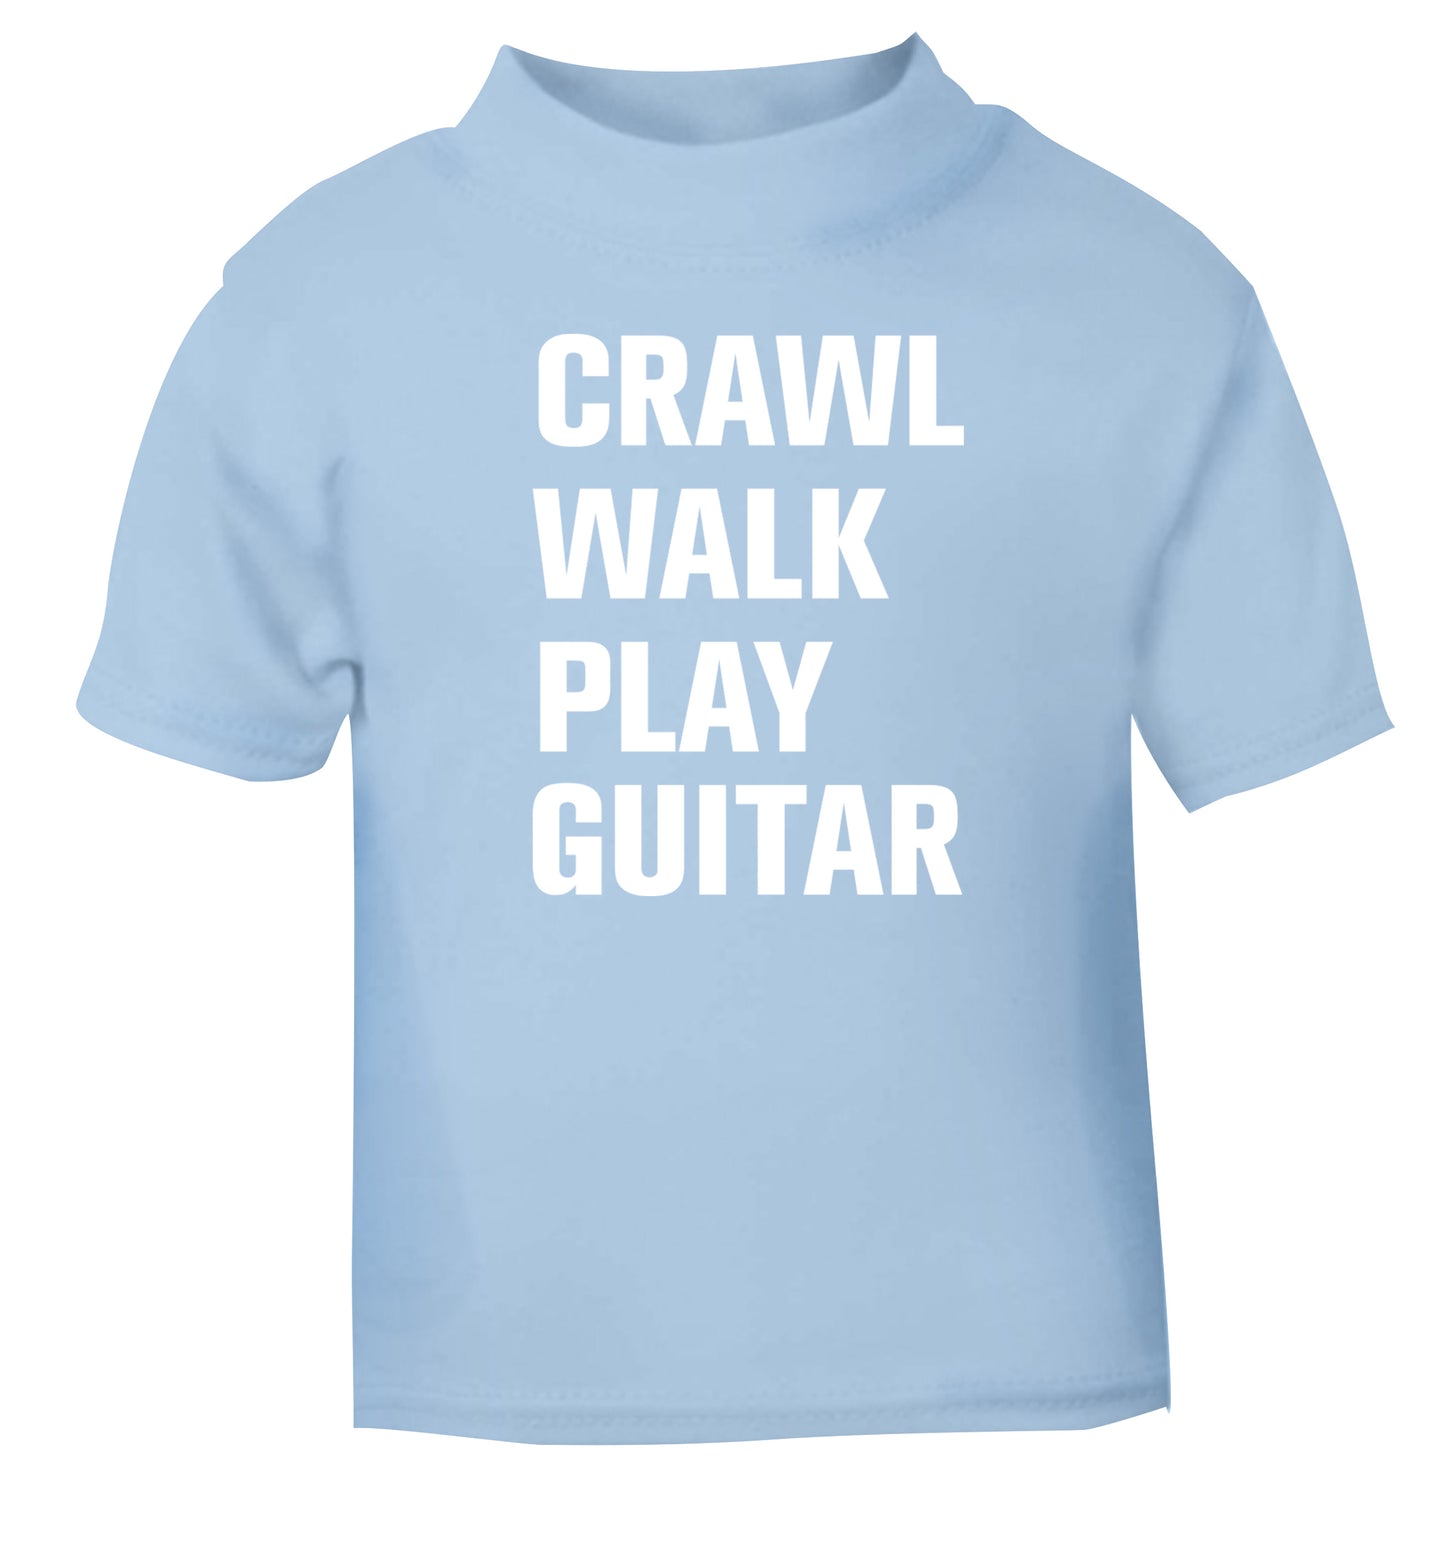 Crawl walk play guitar light blue Baby Toddler Tshirt 2 Years